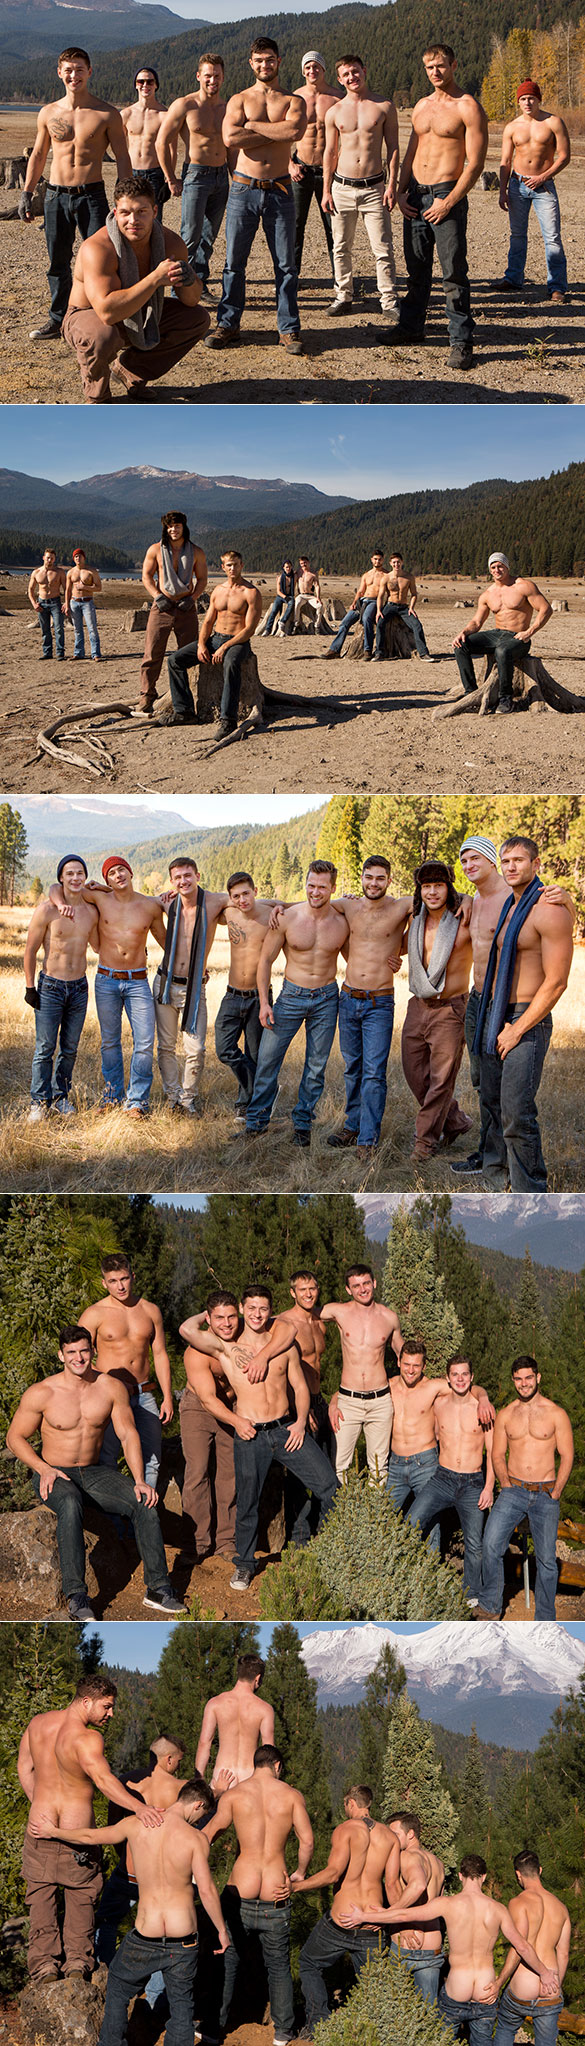 Sean Cody: 9-Man bareback orgy with Tanner, Atticus, Brendan, Joey, Robbie, Blake, Porter, Brodie and Lane in “Winter Getaway, Day 5”